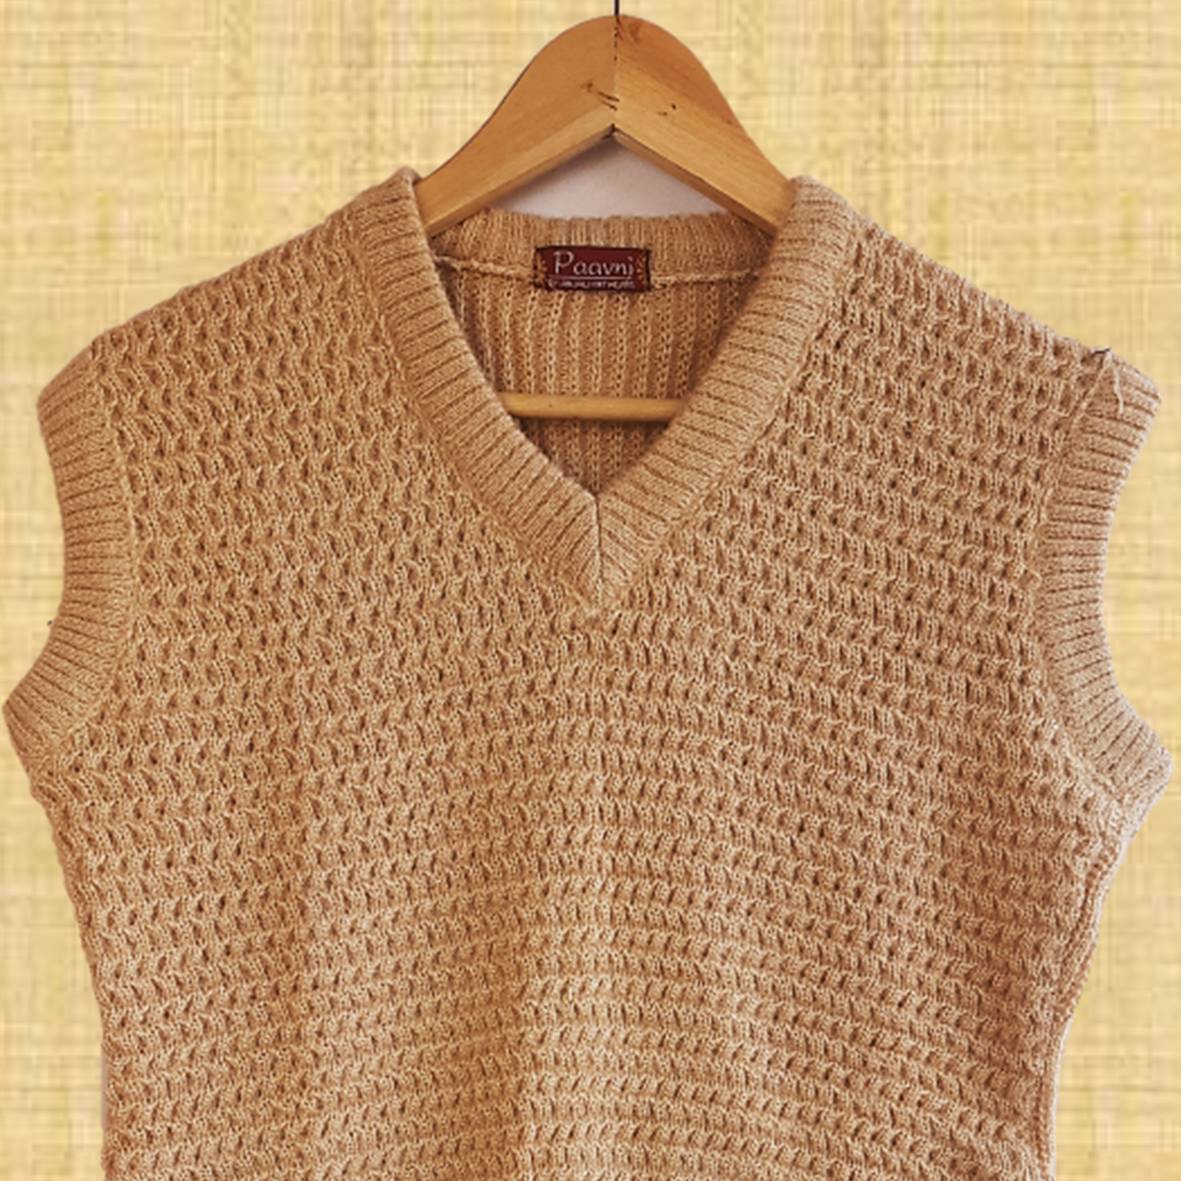 Men's Sleeveless Sweater